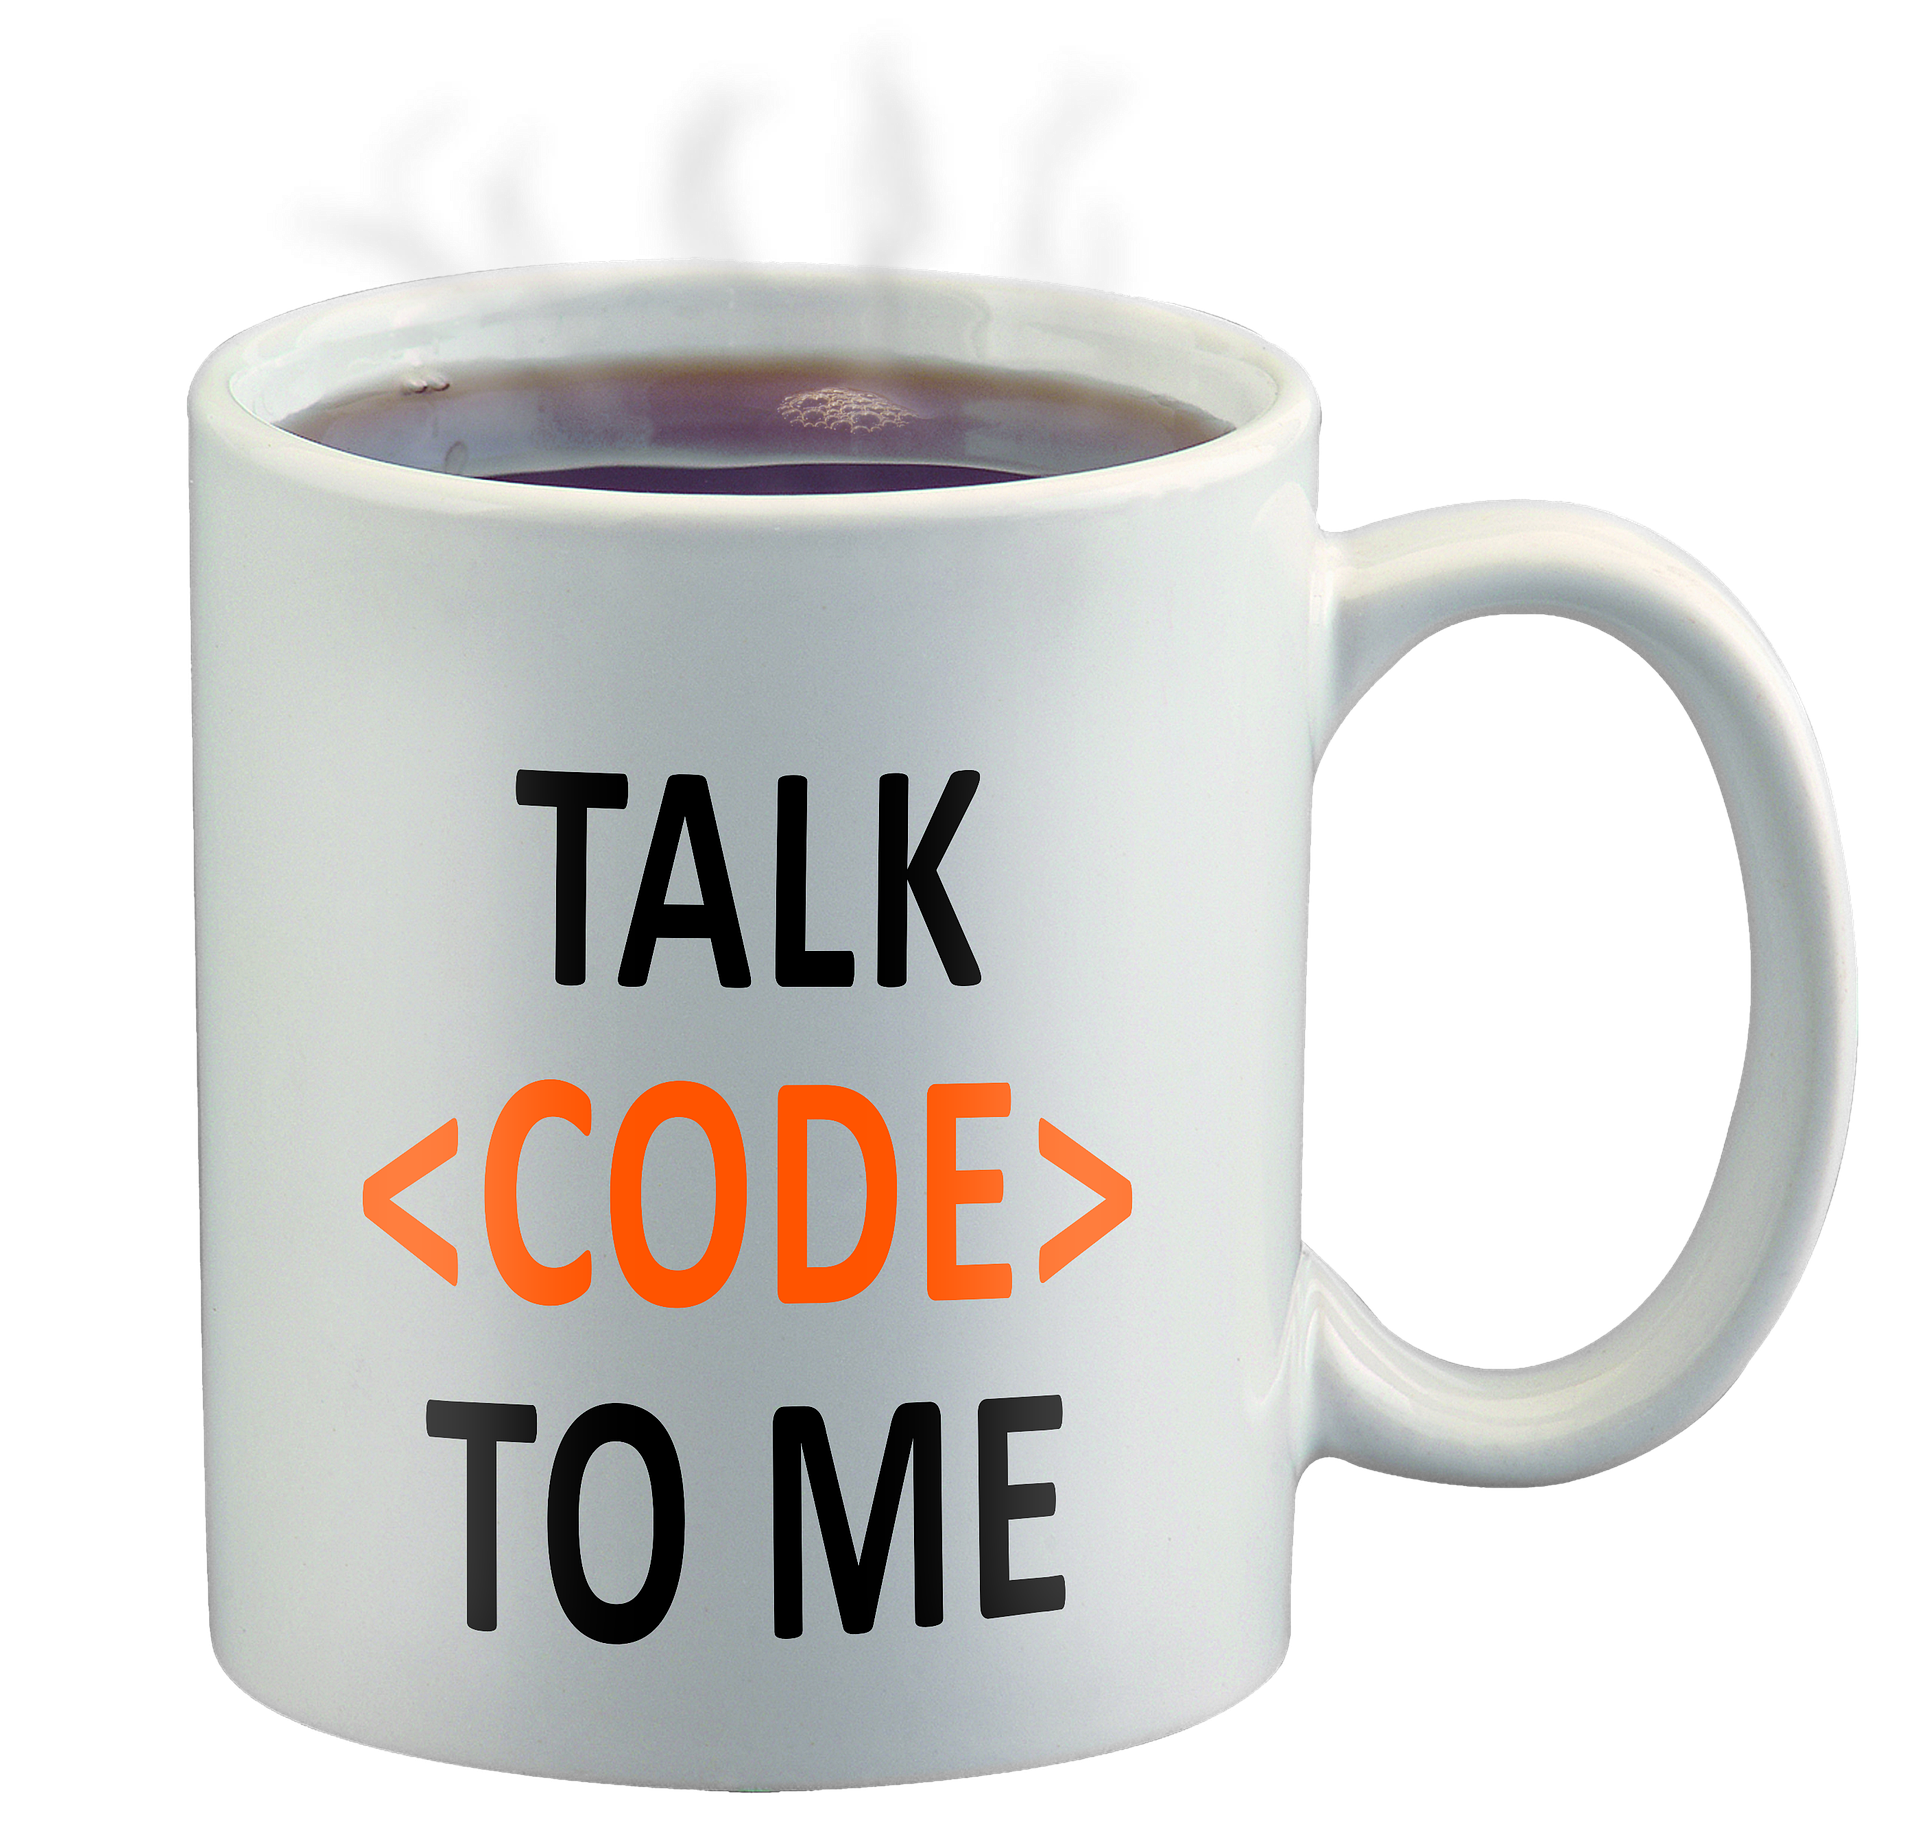 "Talk Code to Me" Image by Jan Alexander - Pixabay